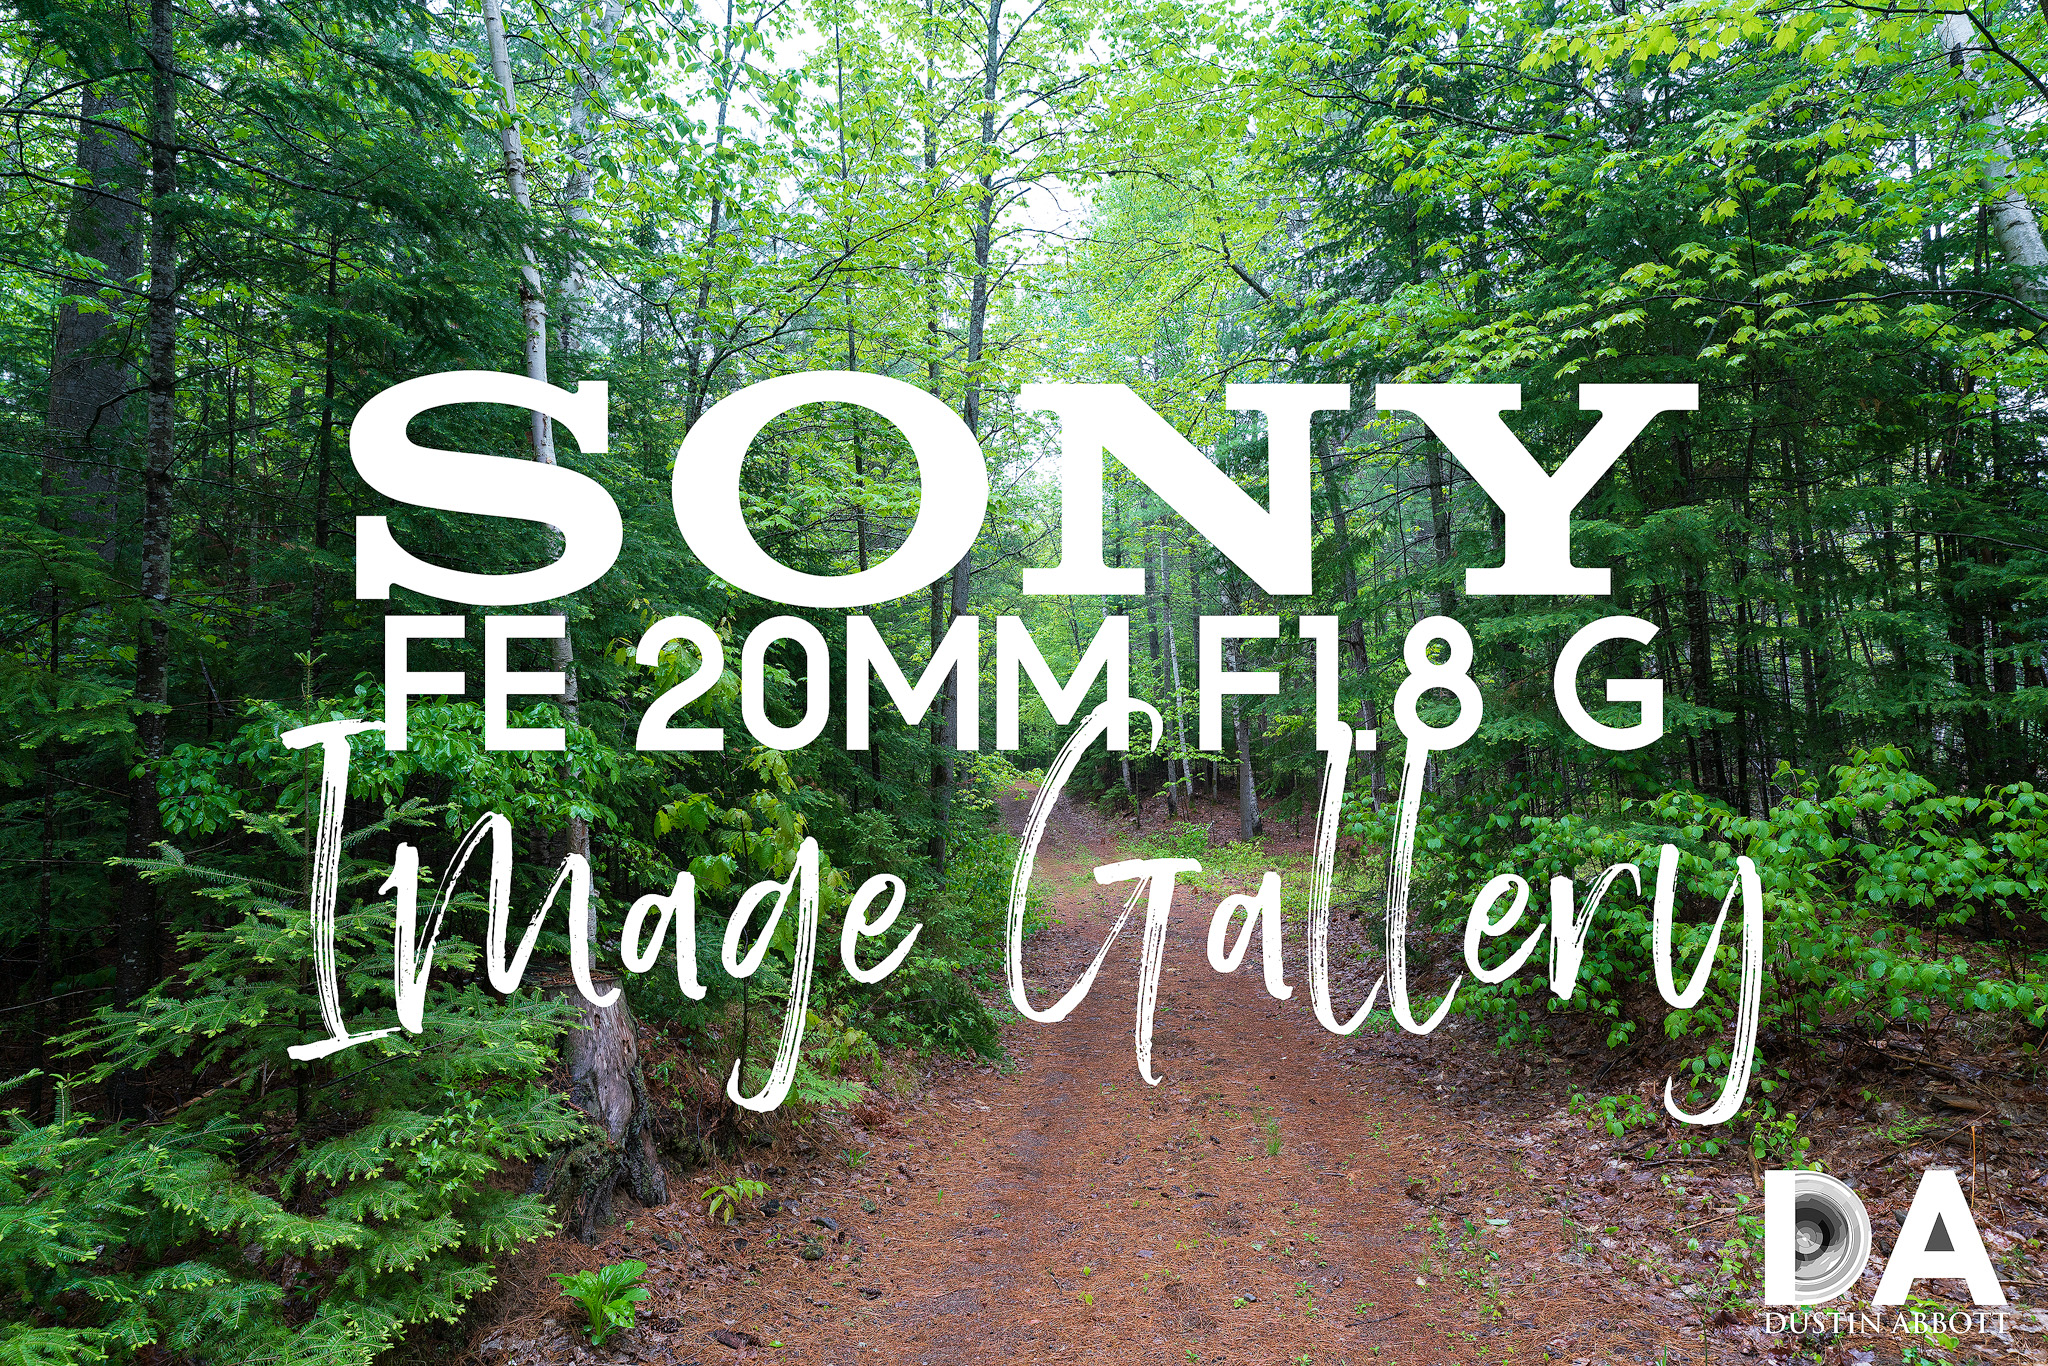 Sony FE 20mm F1.8 G Image Gallery - DustinAbbott.net